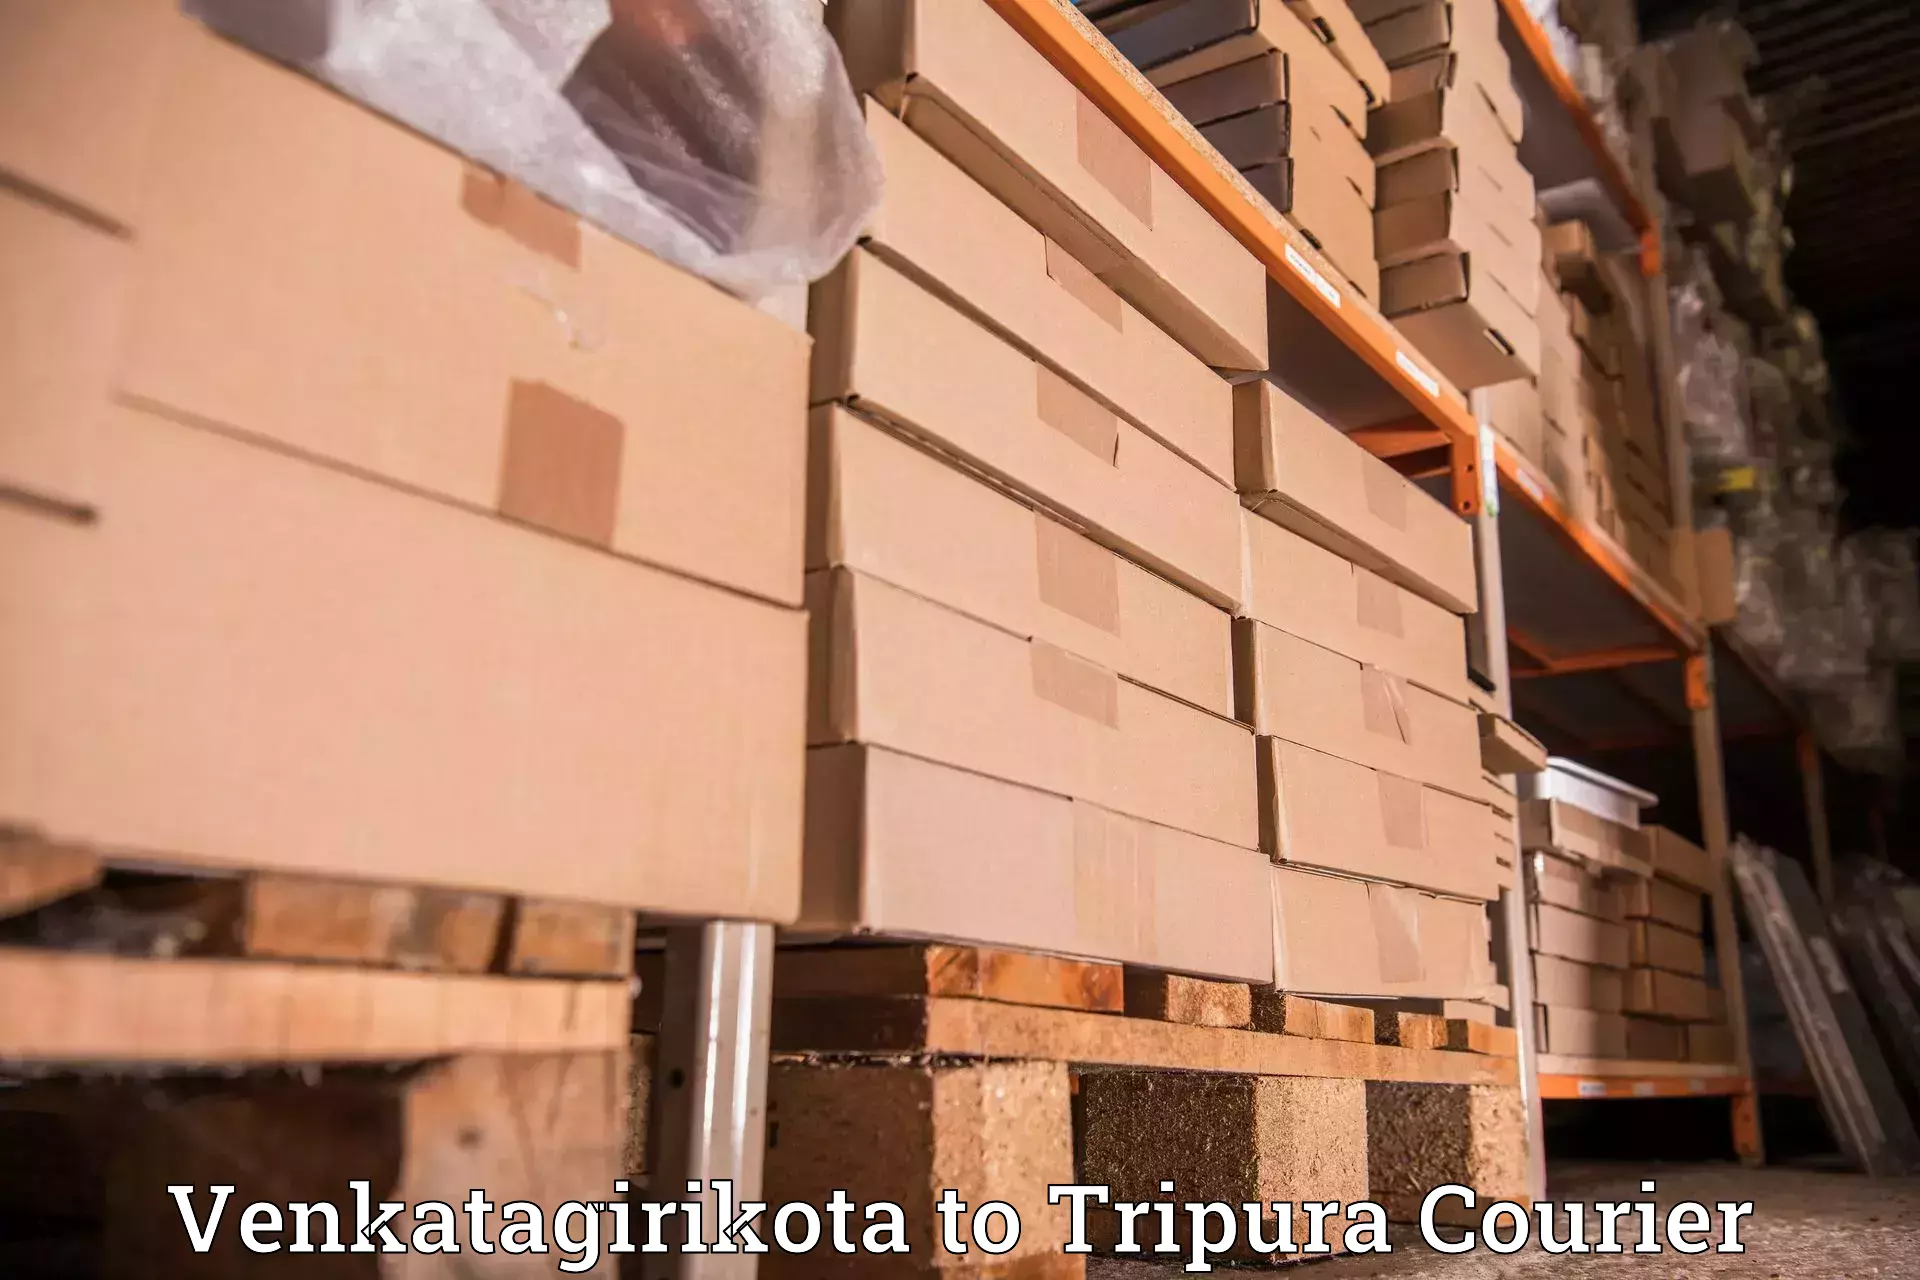 Courier service efficiency Venkatagirikota to Tripura